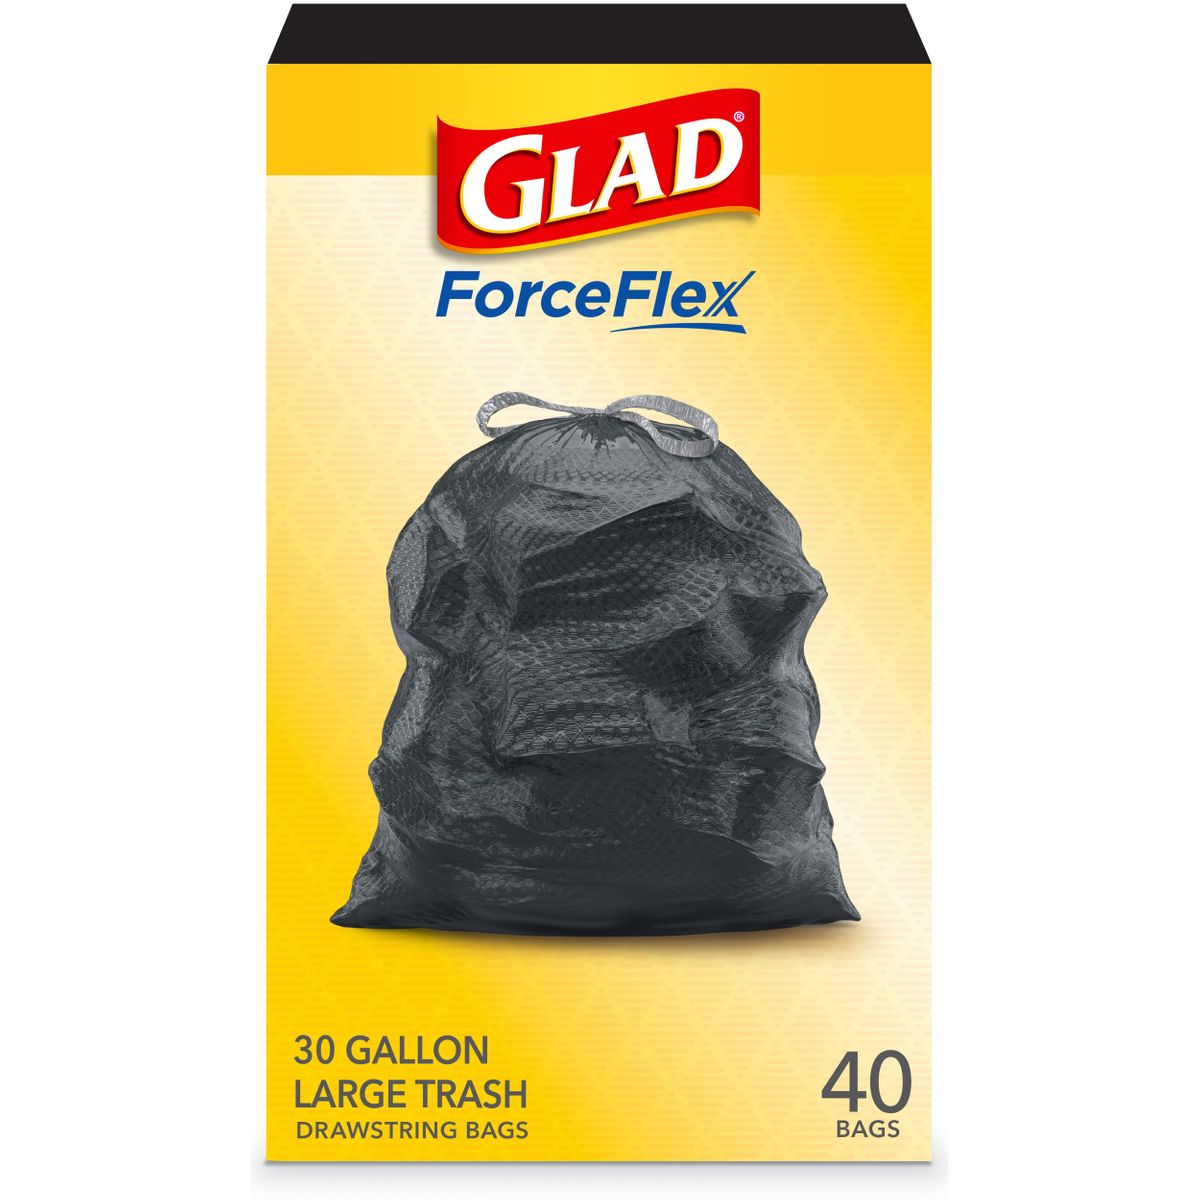 [RDY] [送料無料] Glad ForceFlex 大型ゴミ袋 30 ガロン 40 袋 無香料 [楽天海外通販] | Glad ForceFlex Large Trash Bags, 30 Gallon, 40 Bags Unscented